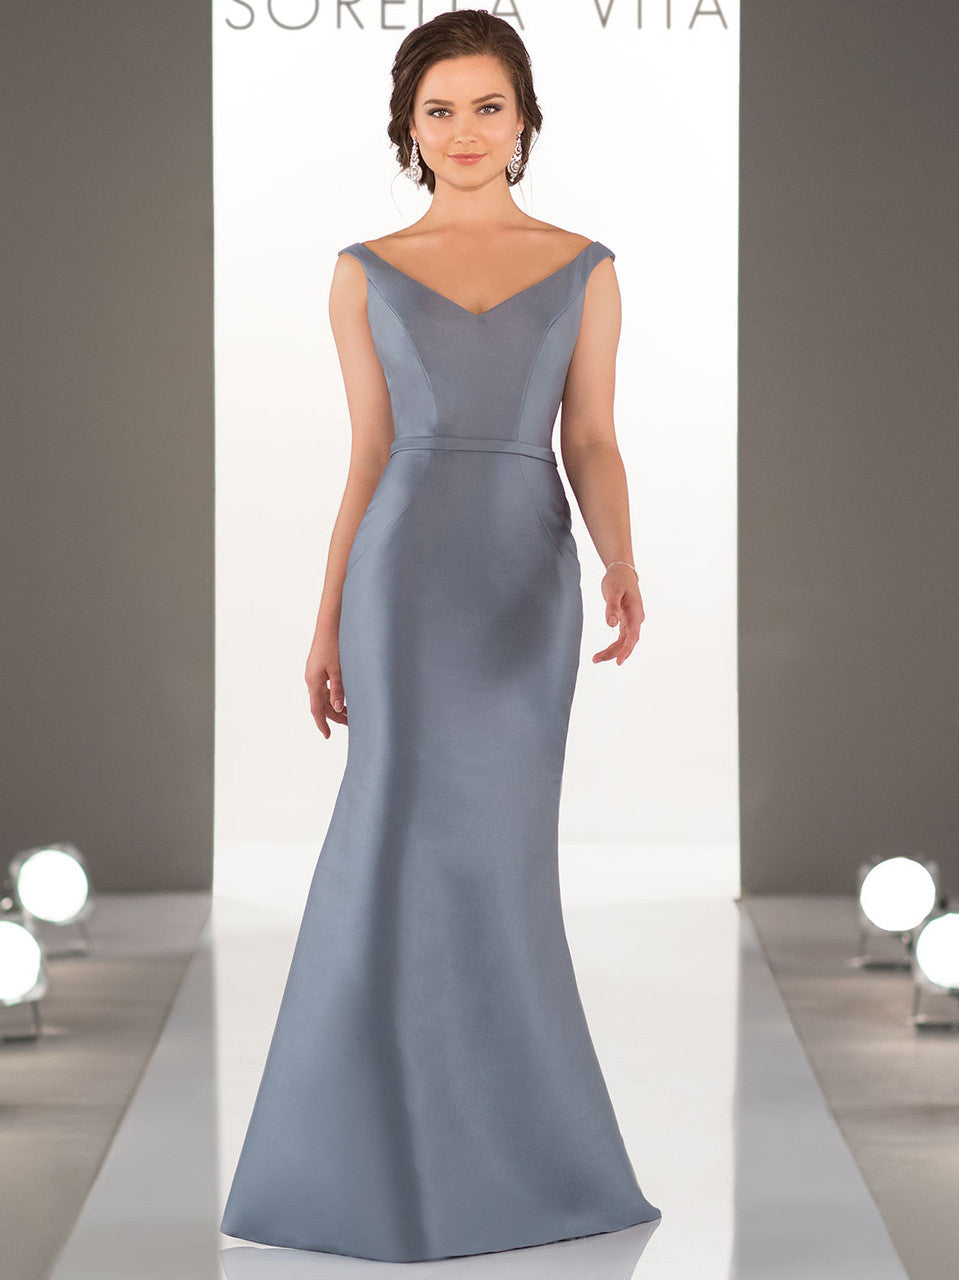 Sorella Vita Dress Style 8964 (Stone Blue-Size 14) Prom, Ball., Black-tie, Bridesmaid, Pageant